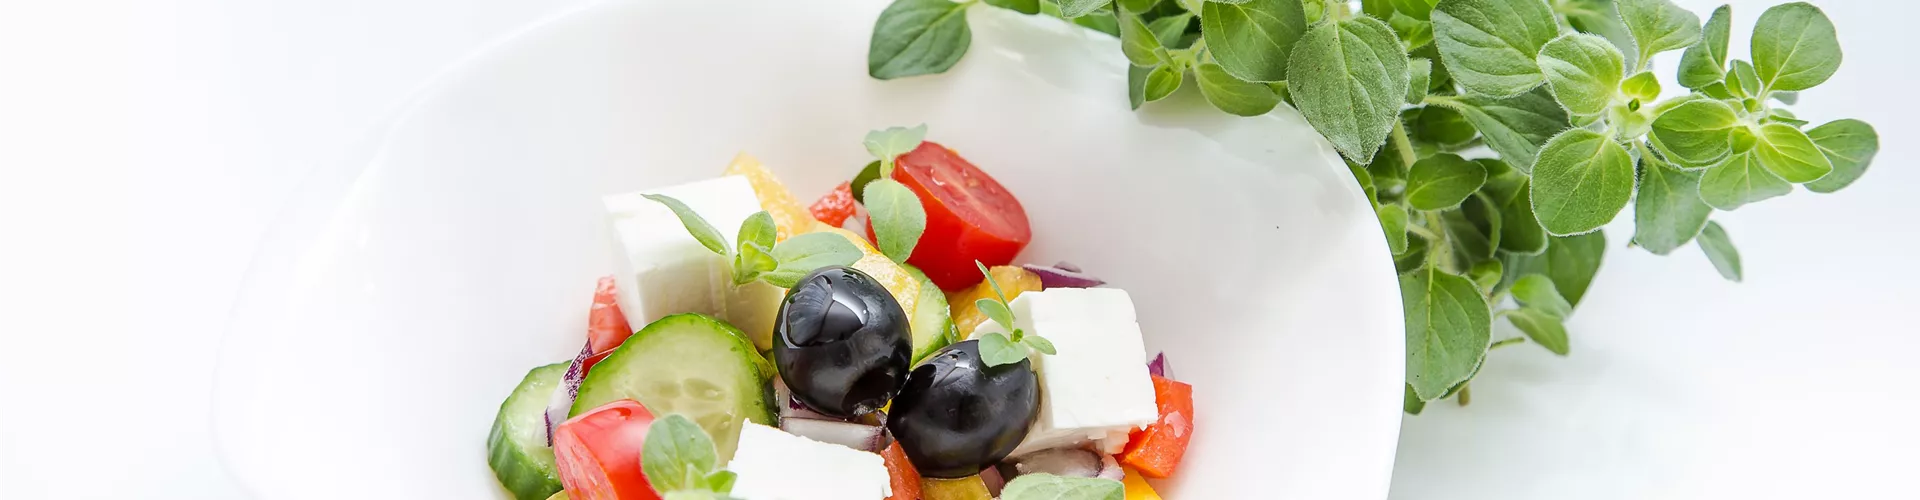 Griechischer Salat für Feinschmecker - Bellaflora